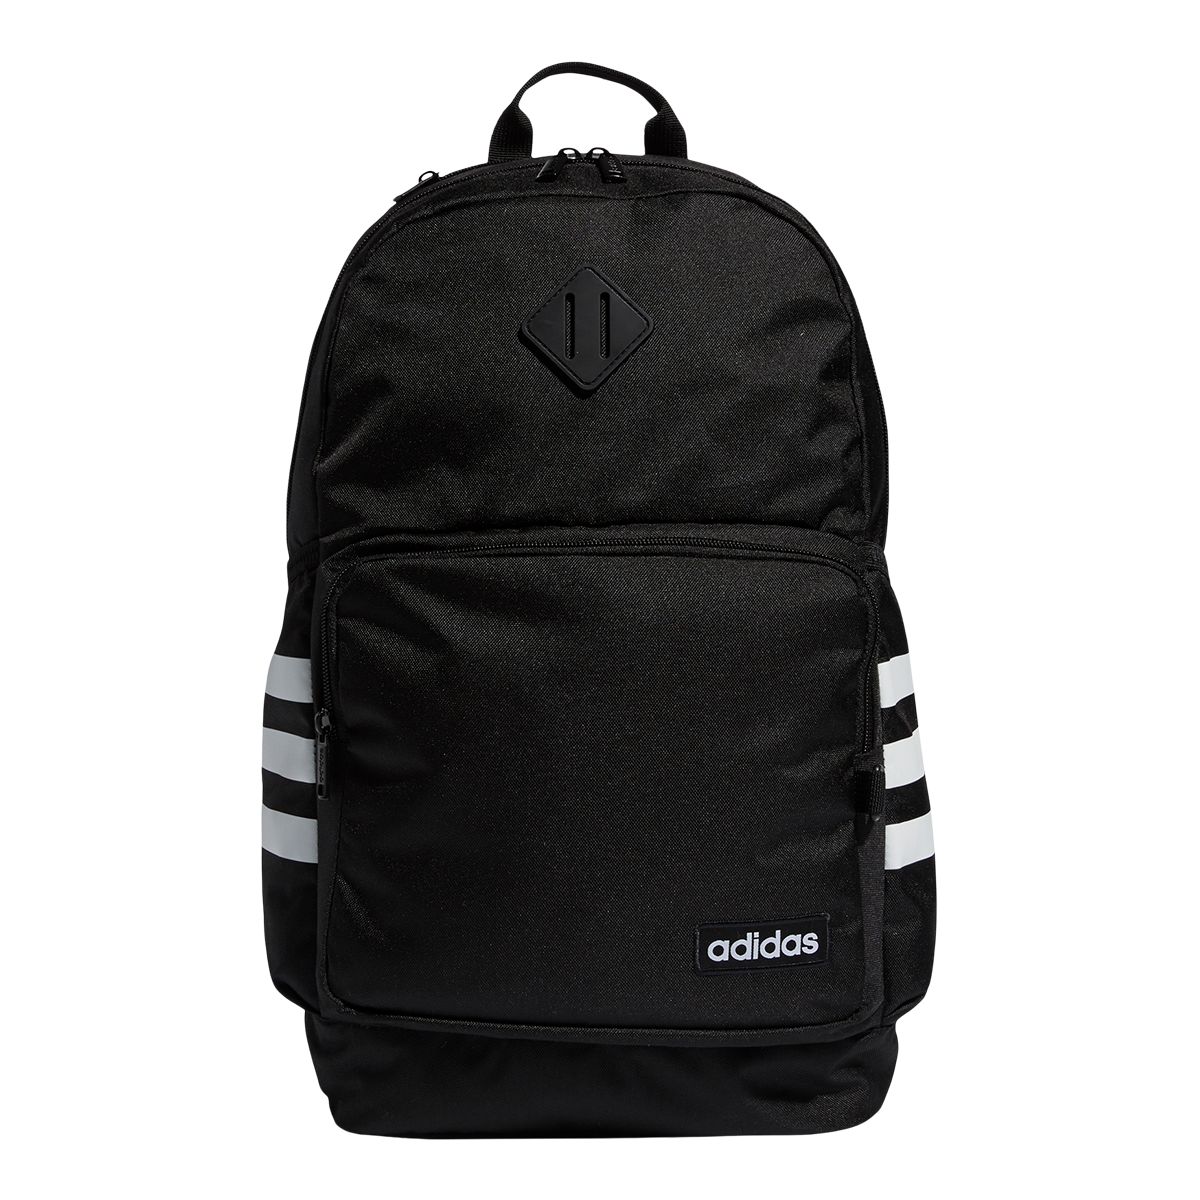 Backpack adidas Power - Backpacks - Bags - Equipment